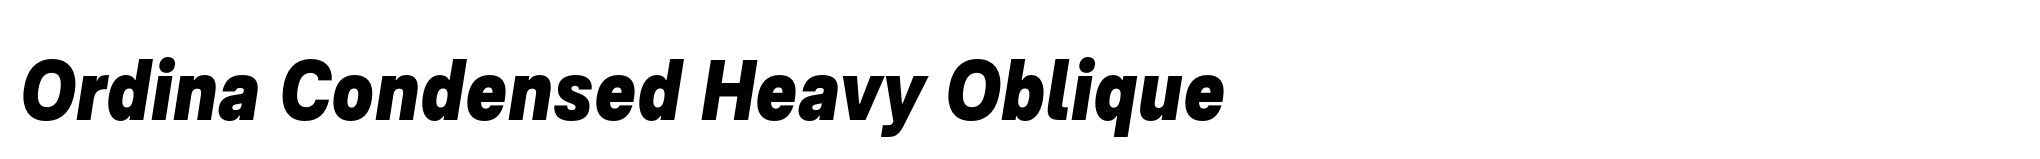 Ordina Condensed Heavy Oblique image